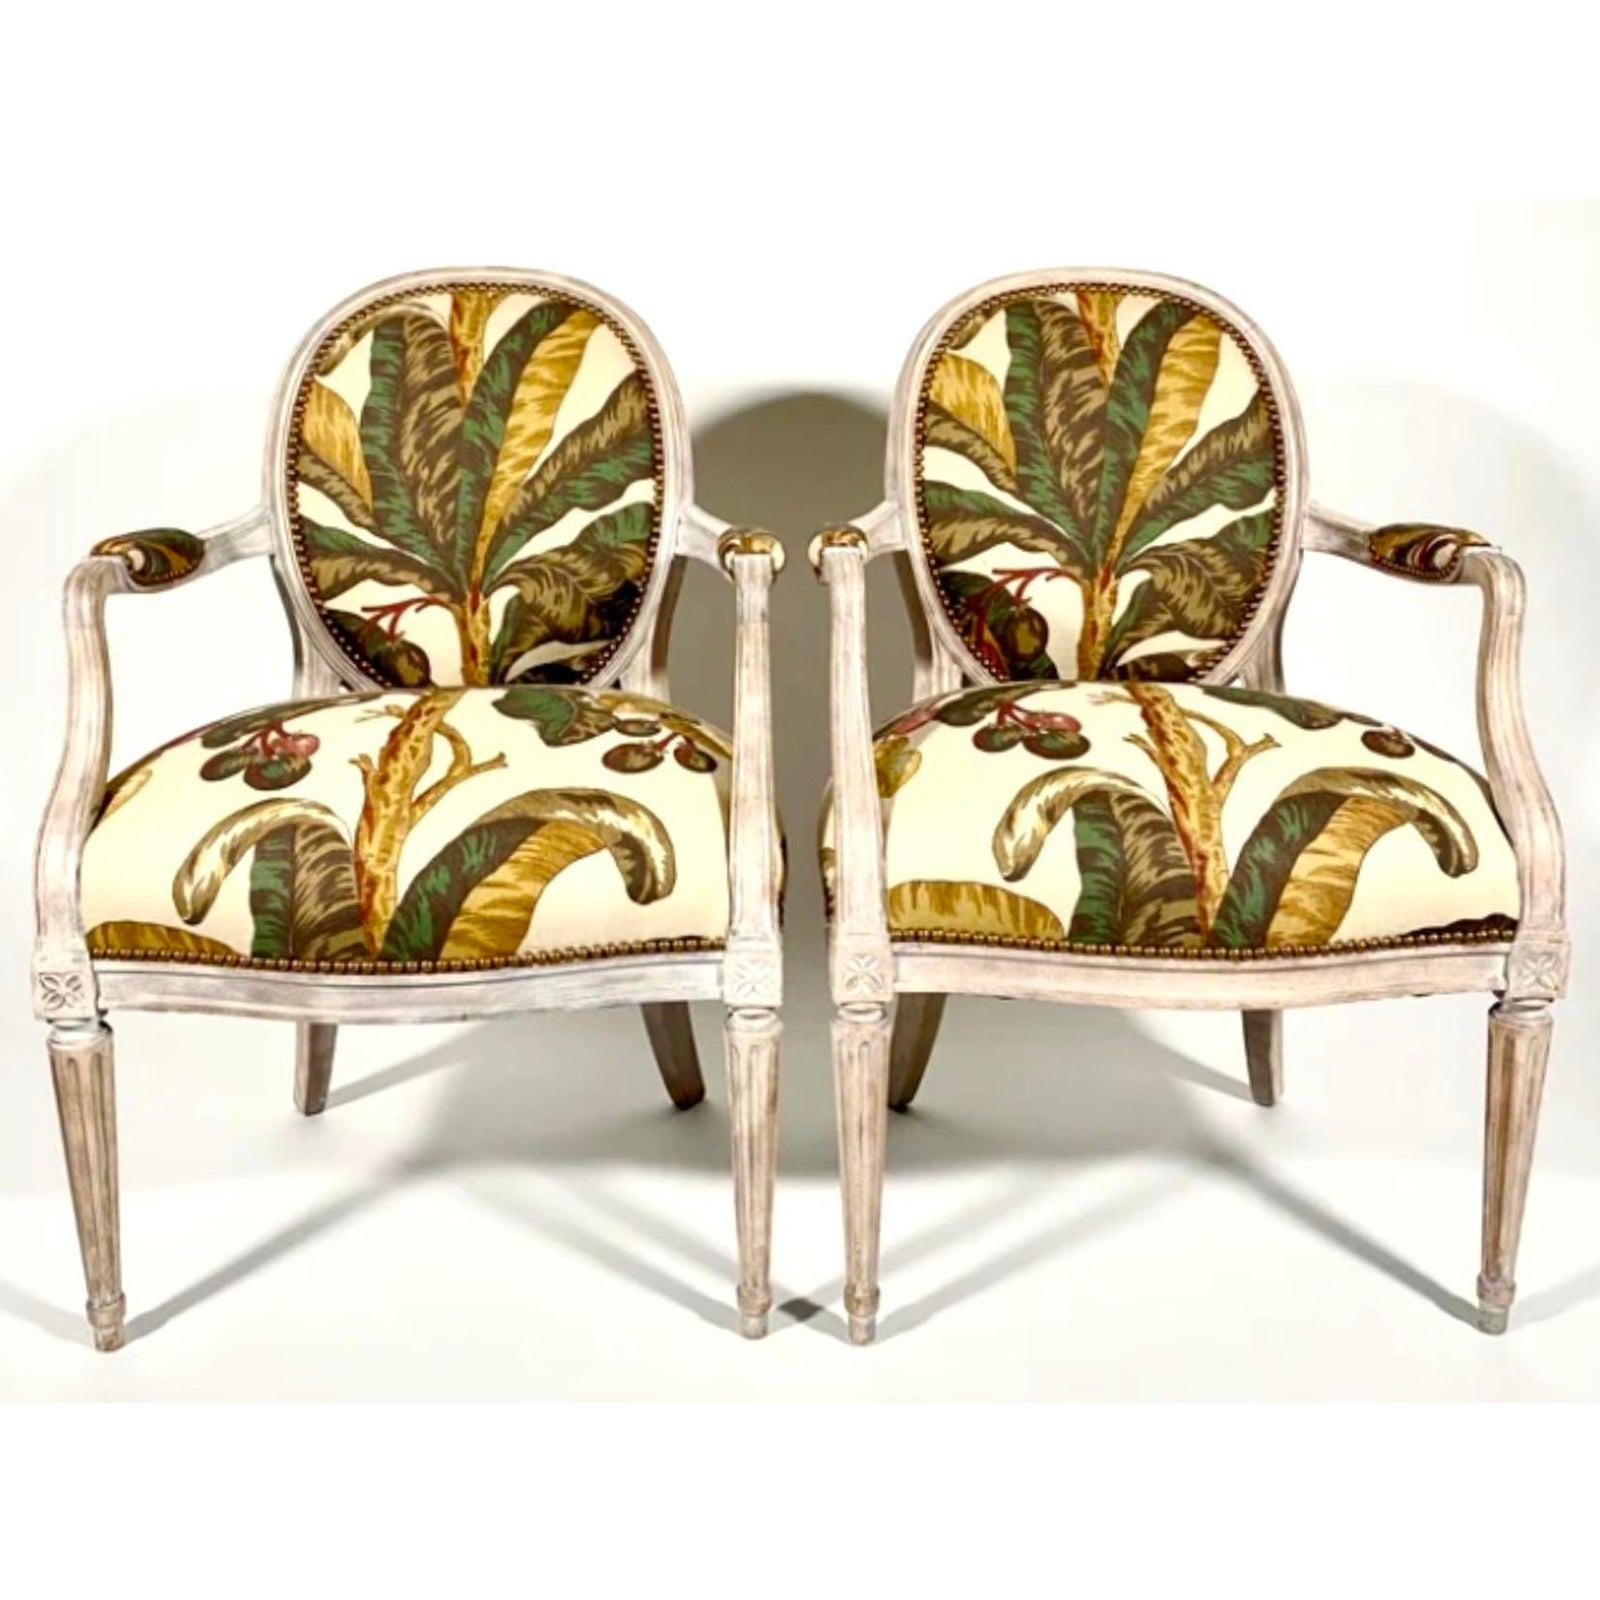 Upholstery Vintage Regency George III Style Bergere Chairs in Schumacher “Blair House” 